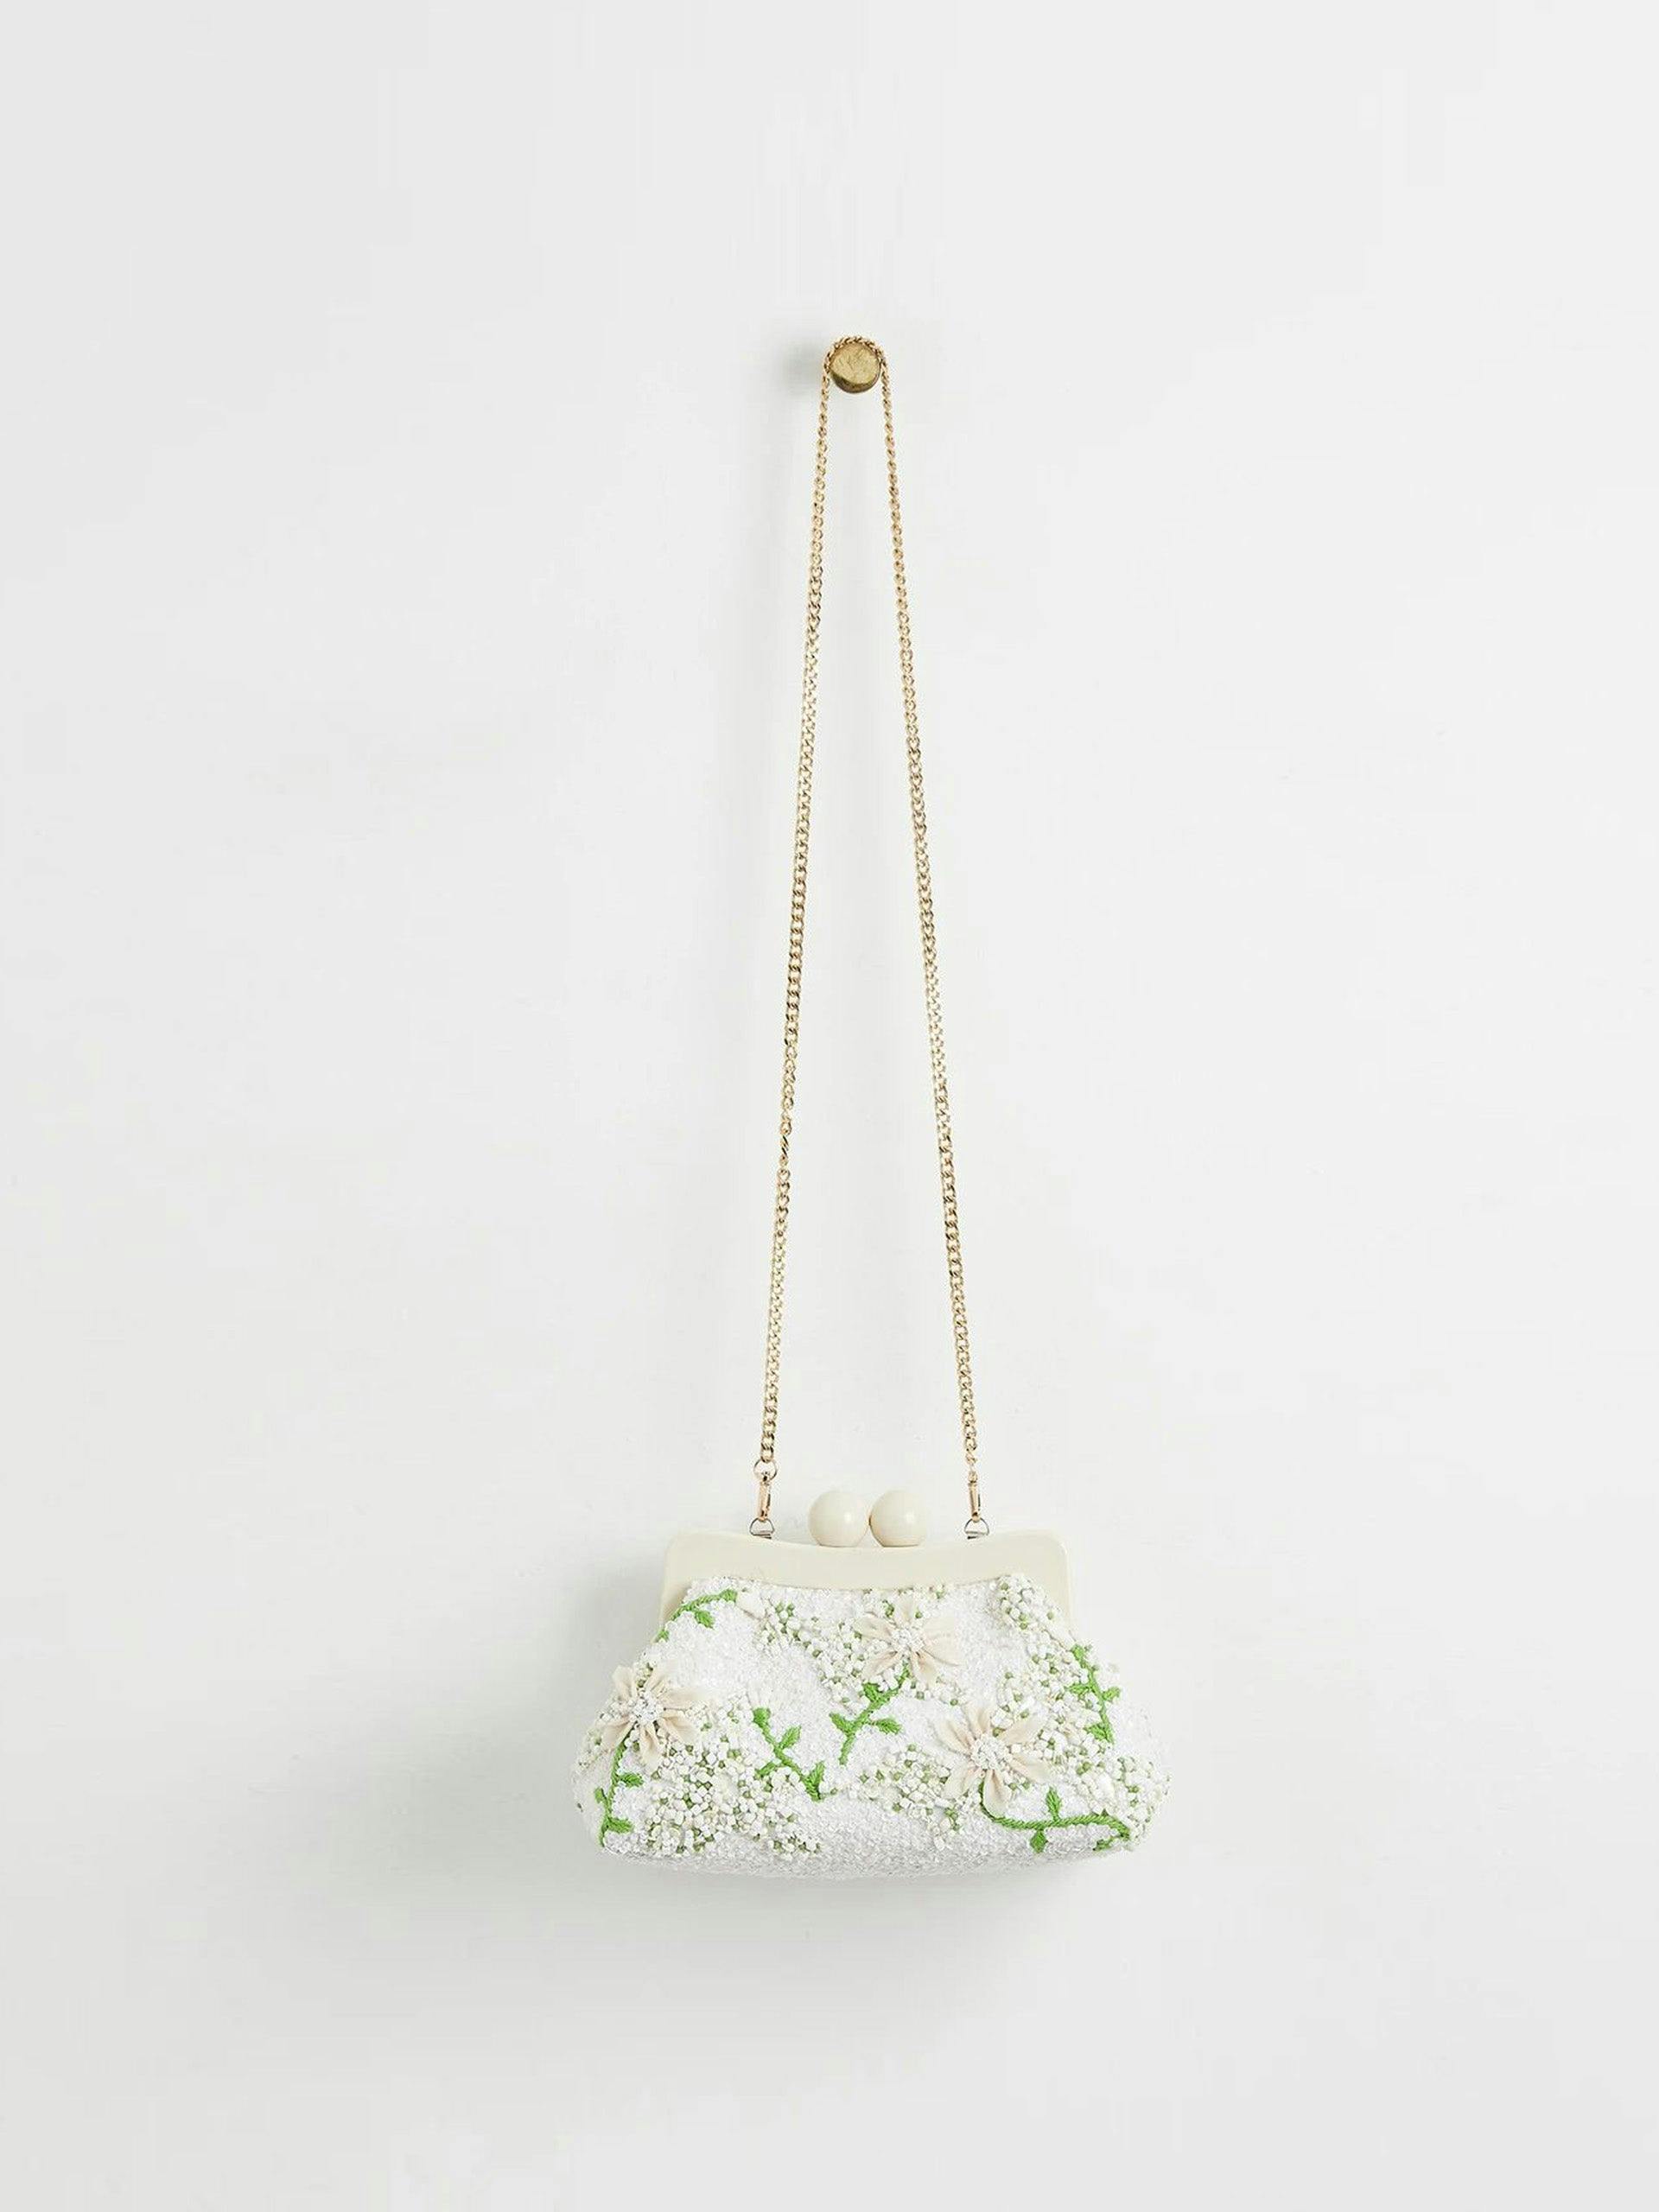 Via soft pearl floral white clutch bag